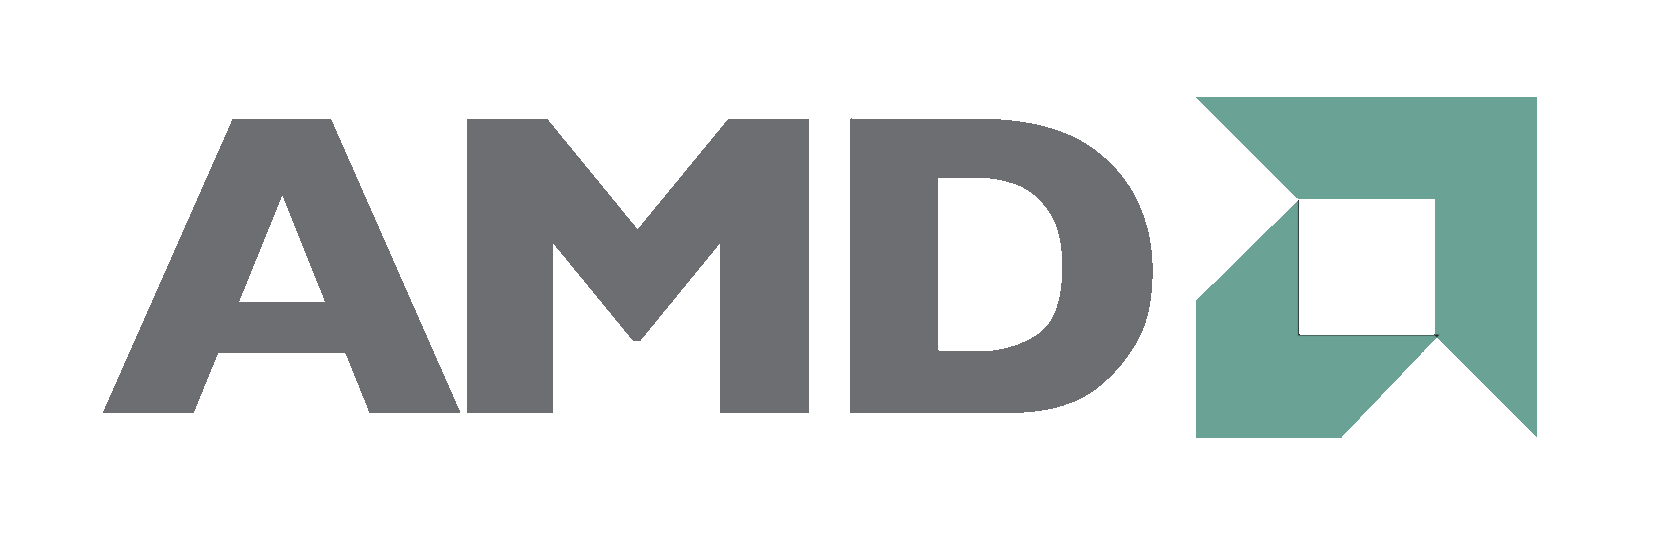 Amd support pa 300. AMD. AMD logo. Иконка АМД. Ярлык АМД.